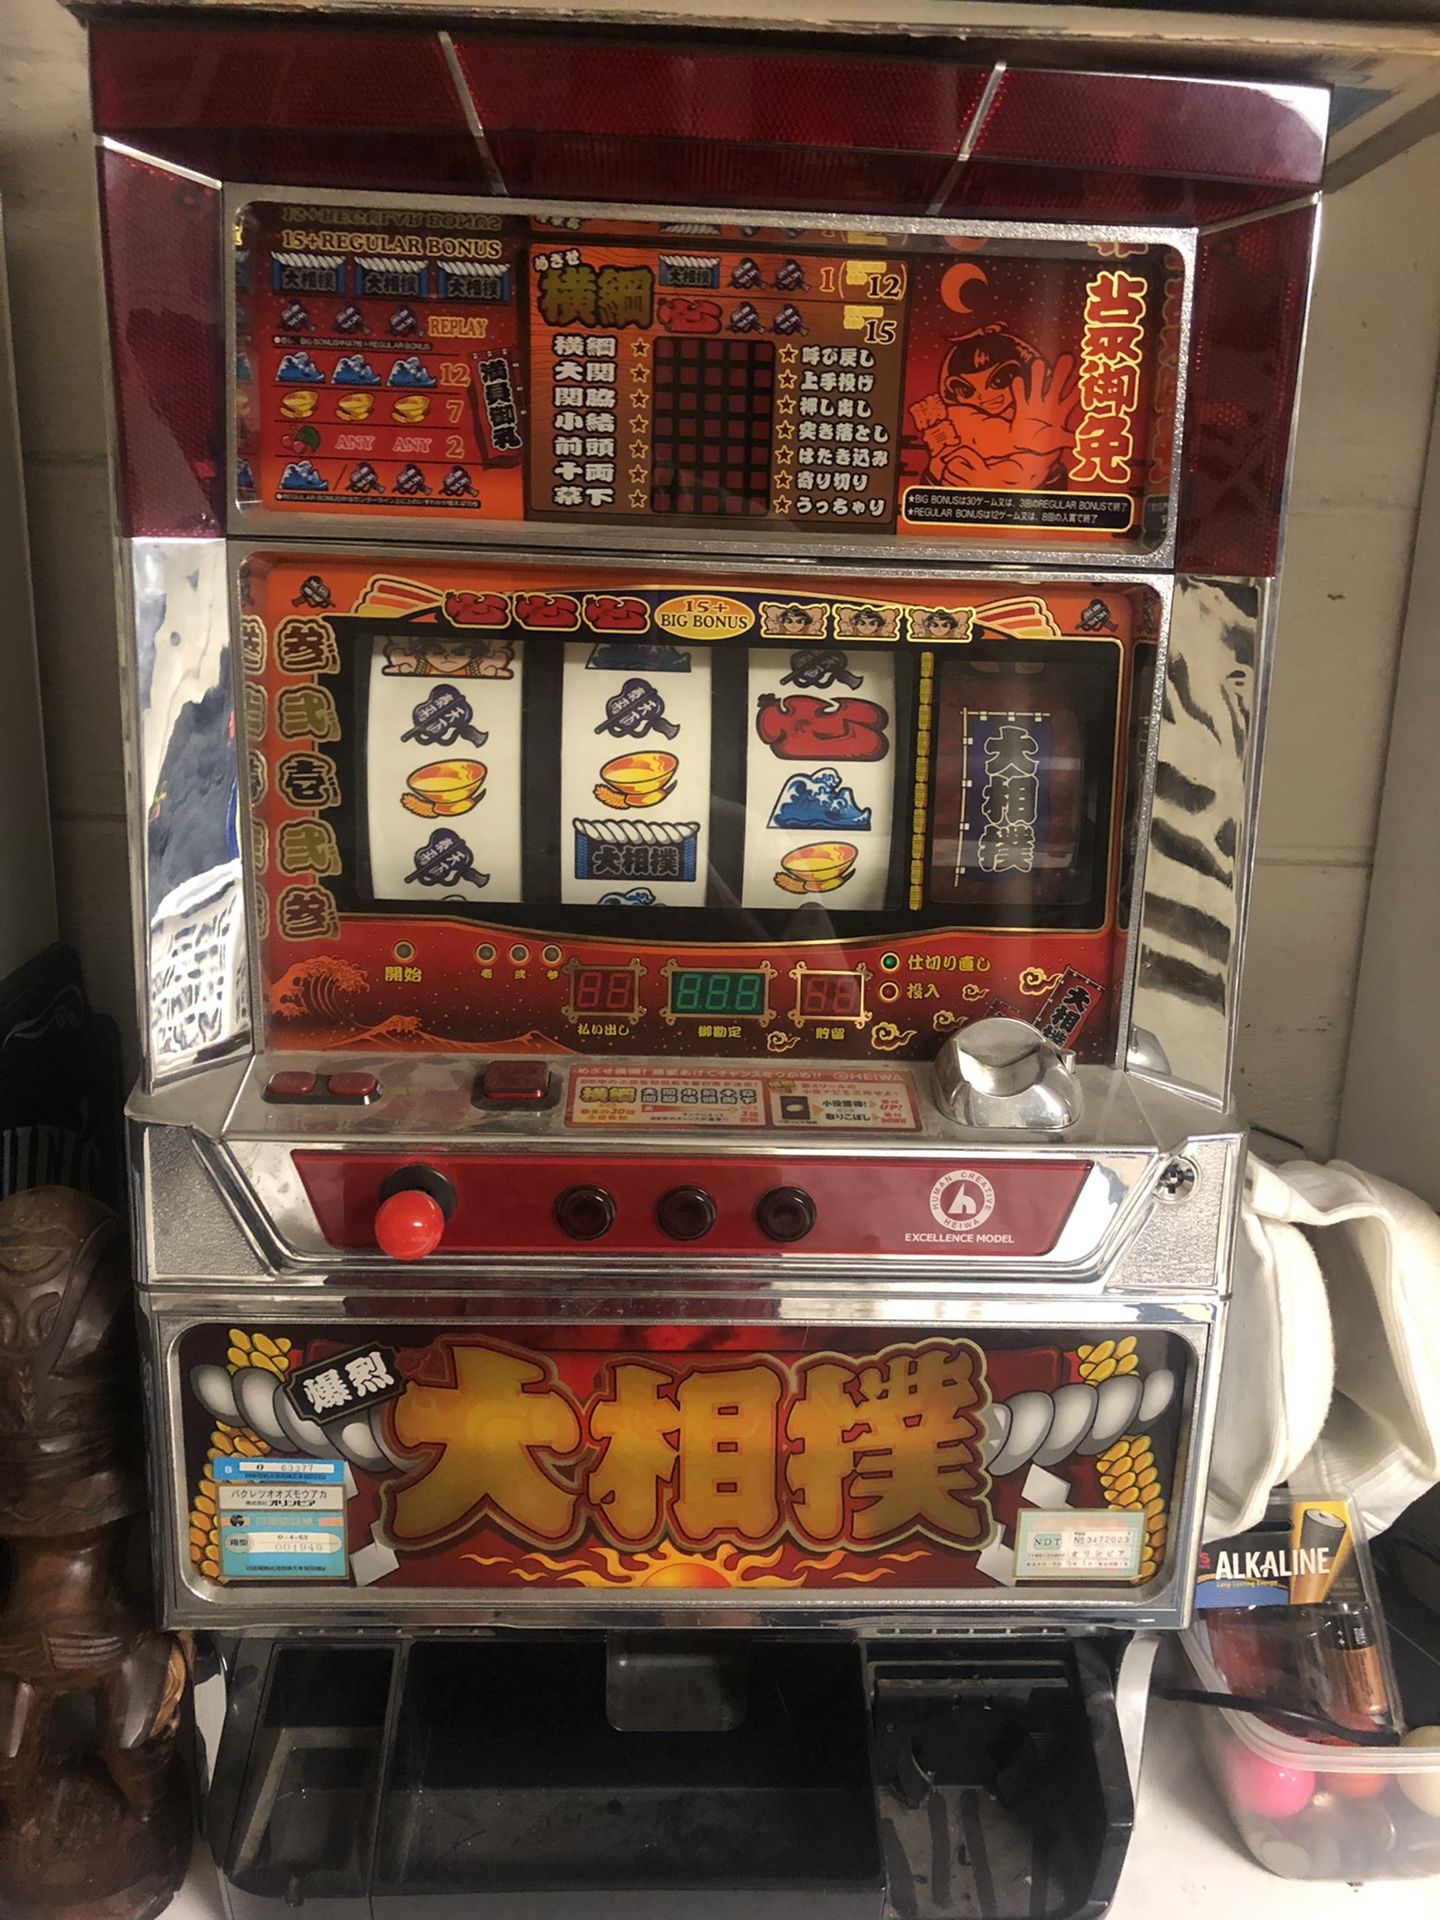 Slot machine and tokens